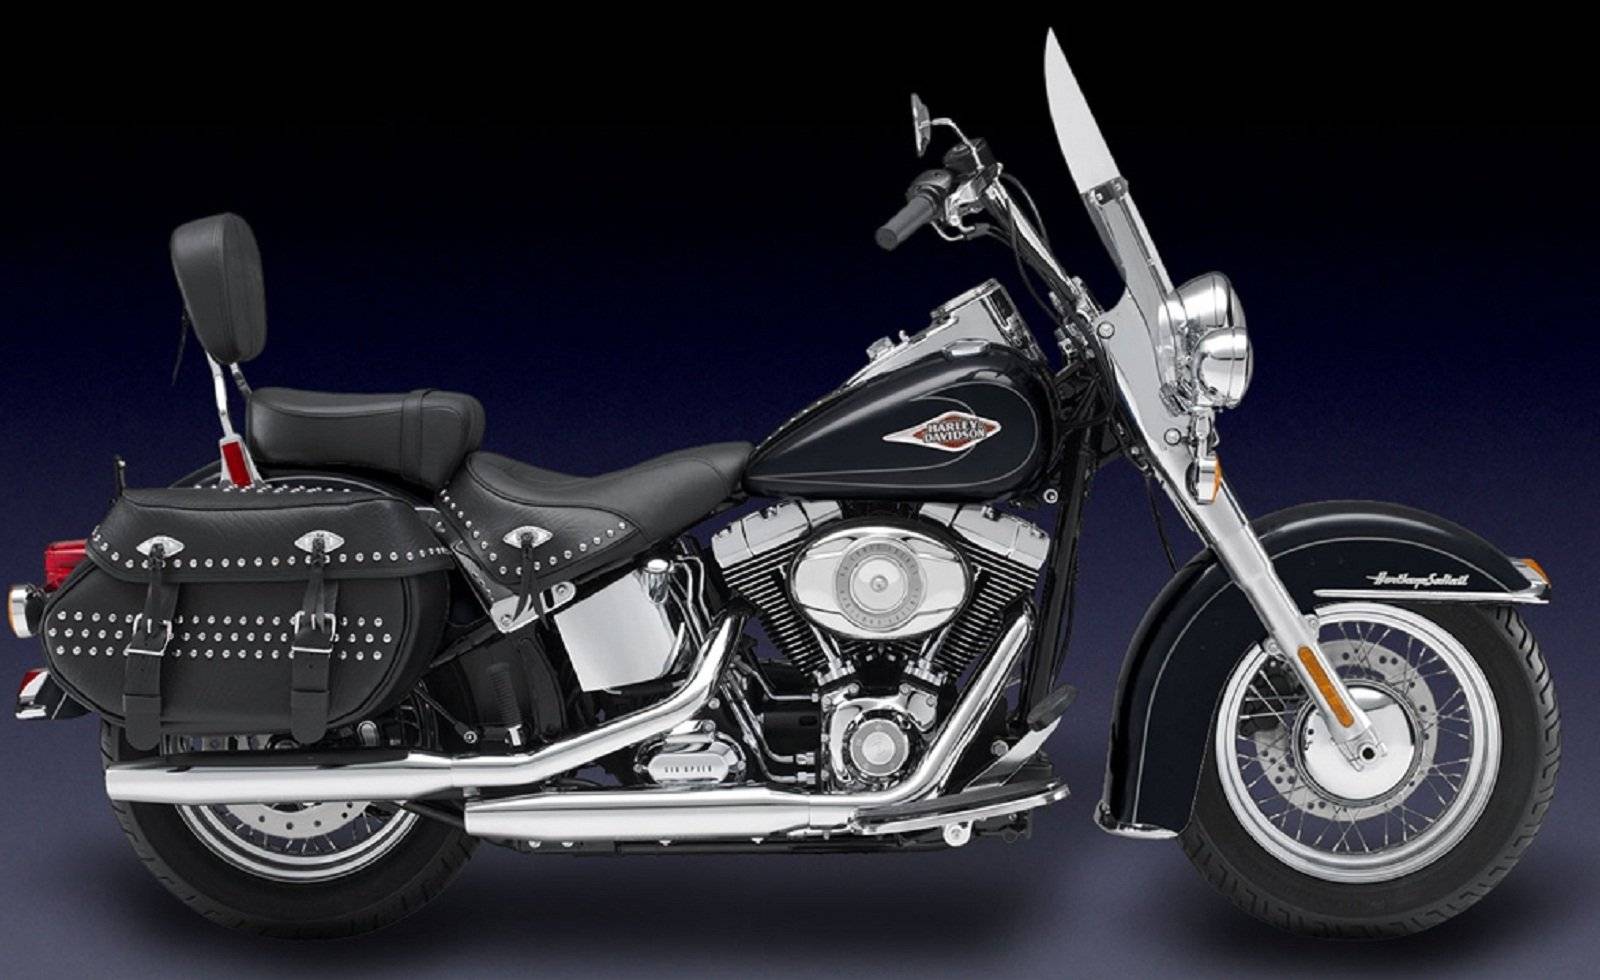 Harley-davidson heritage softail classic price, images & used heritage softail classic bikes - bikewale